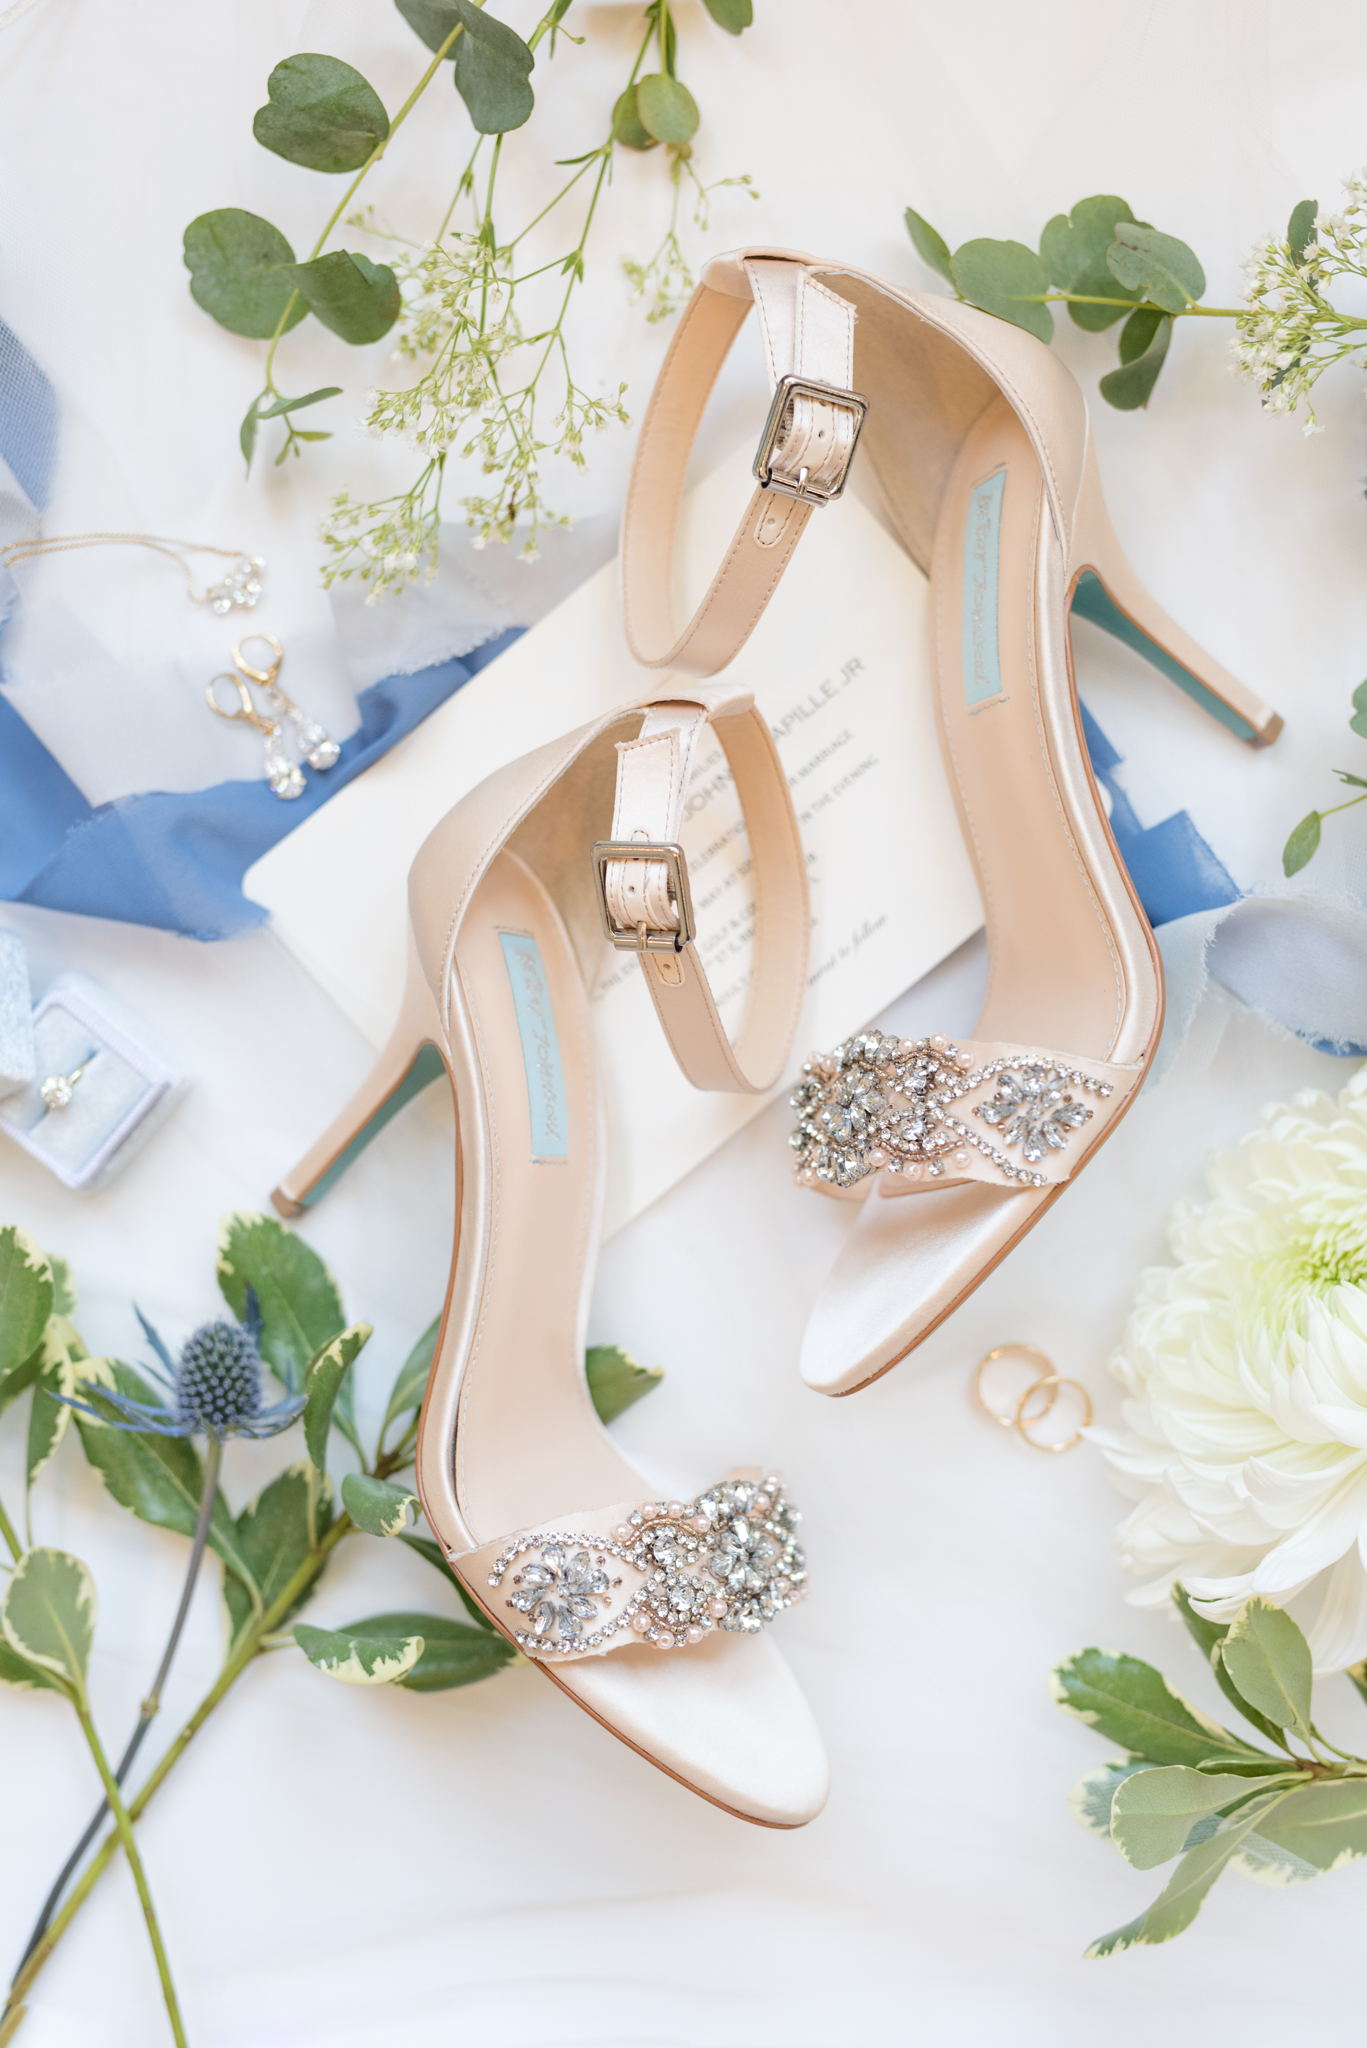 Wedding shoes sit on invitation suite.